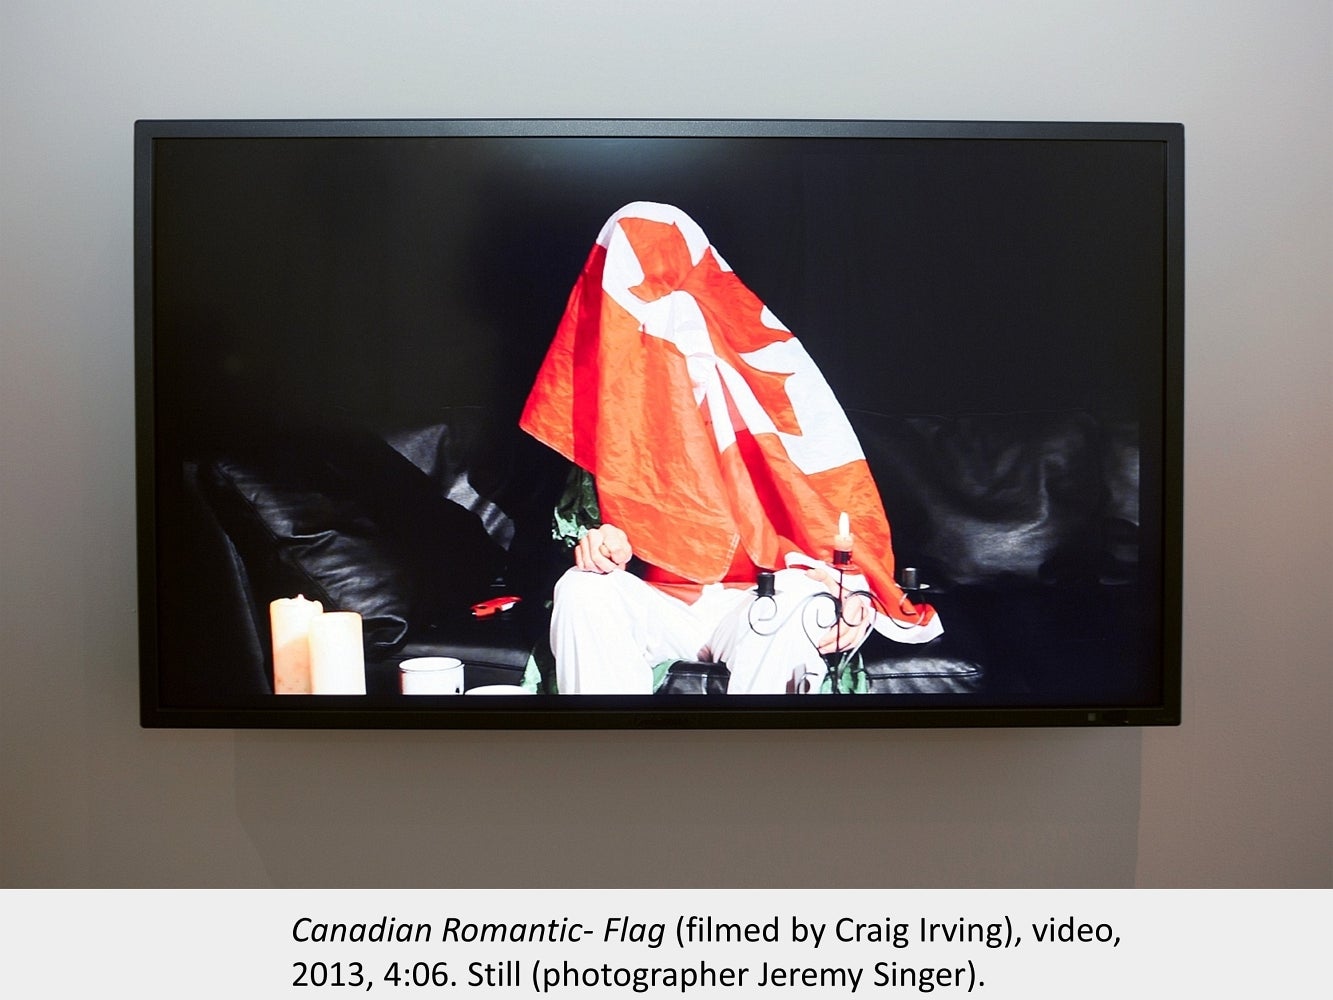 Artwork by Robert Dayton.  "Canadian Romantic- Flag" 2013. Video filmed by Craig Irving. Video Still photographer Jeremy Singer